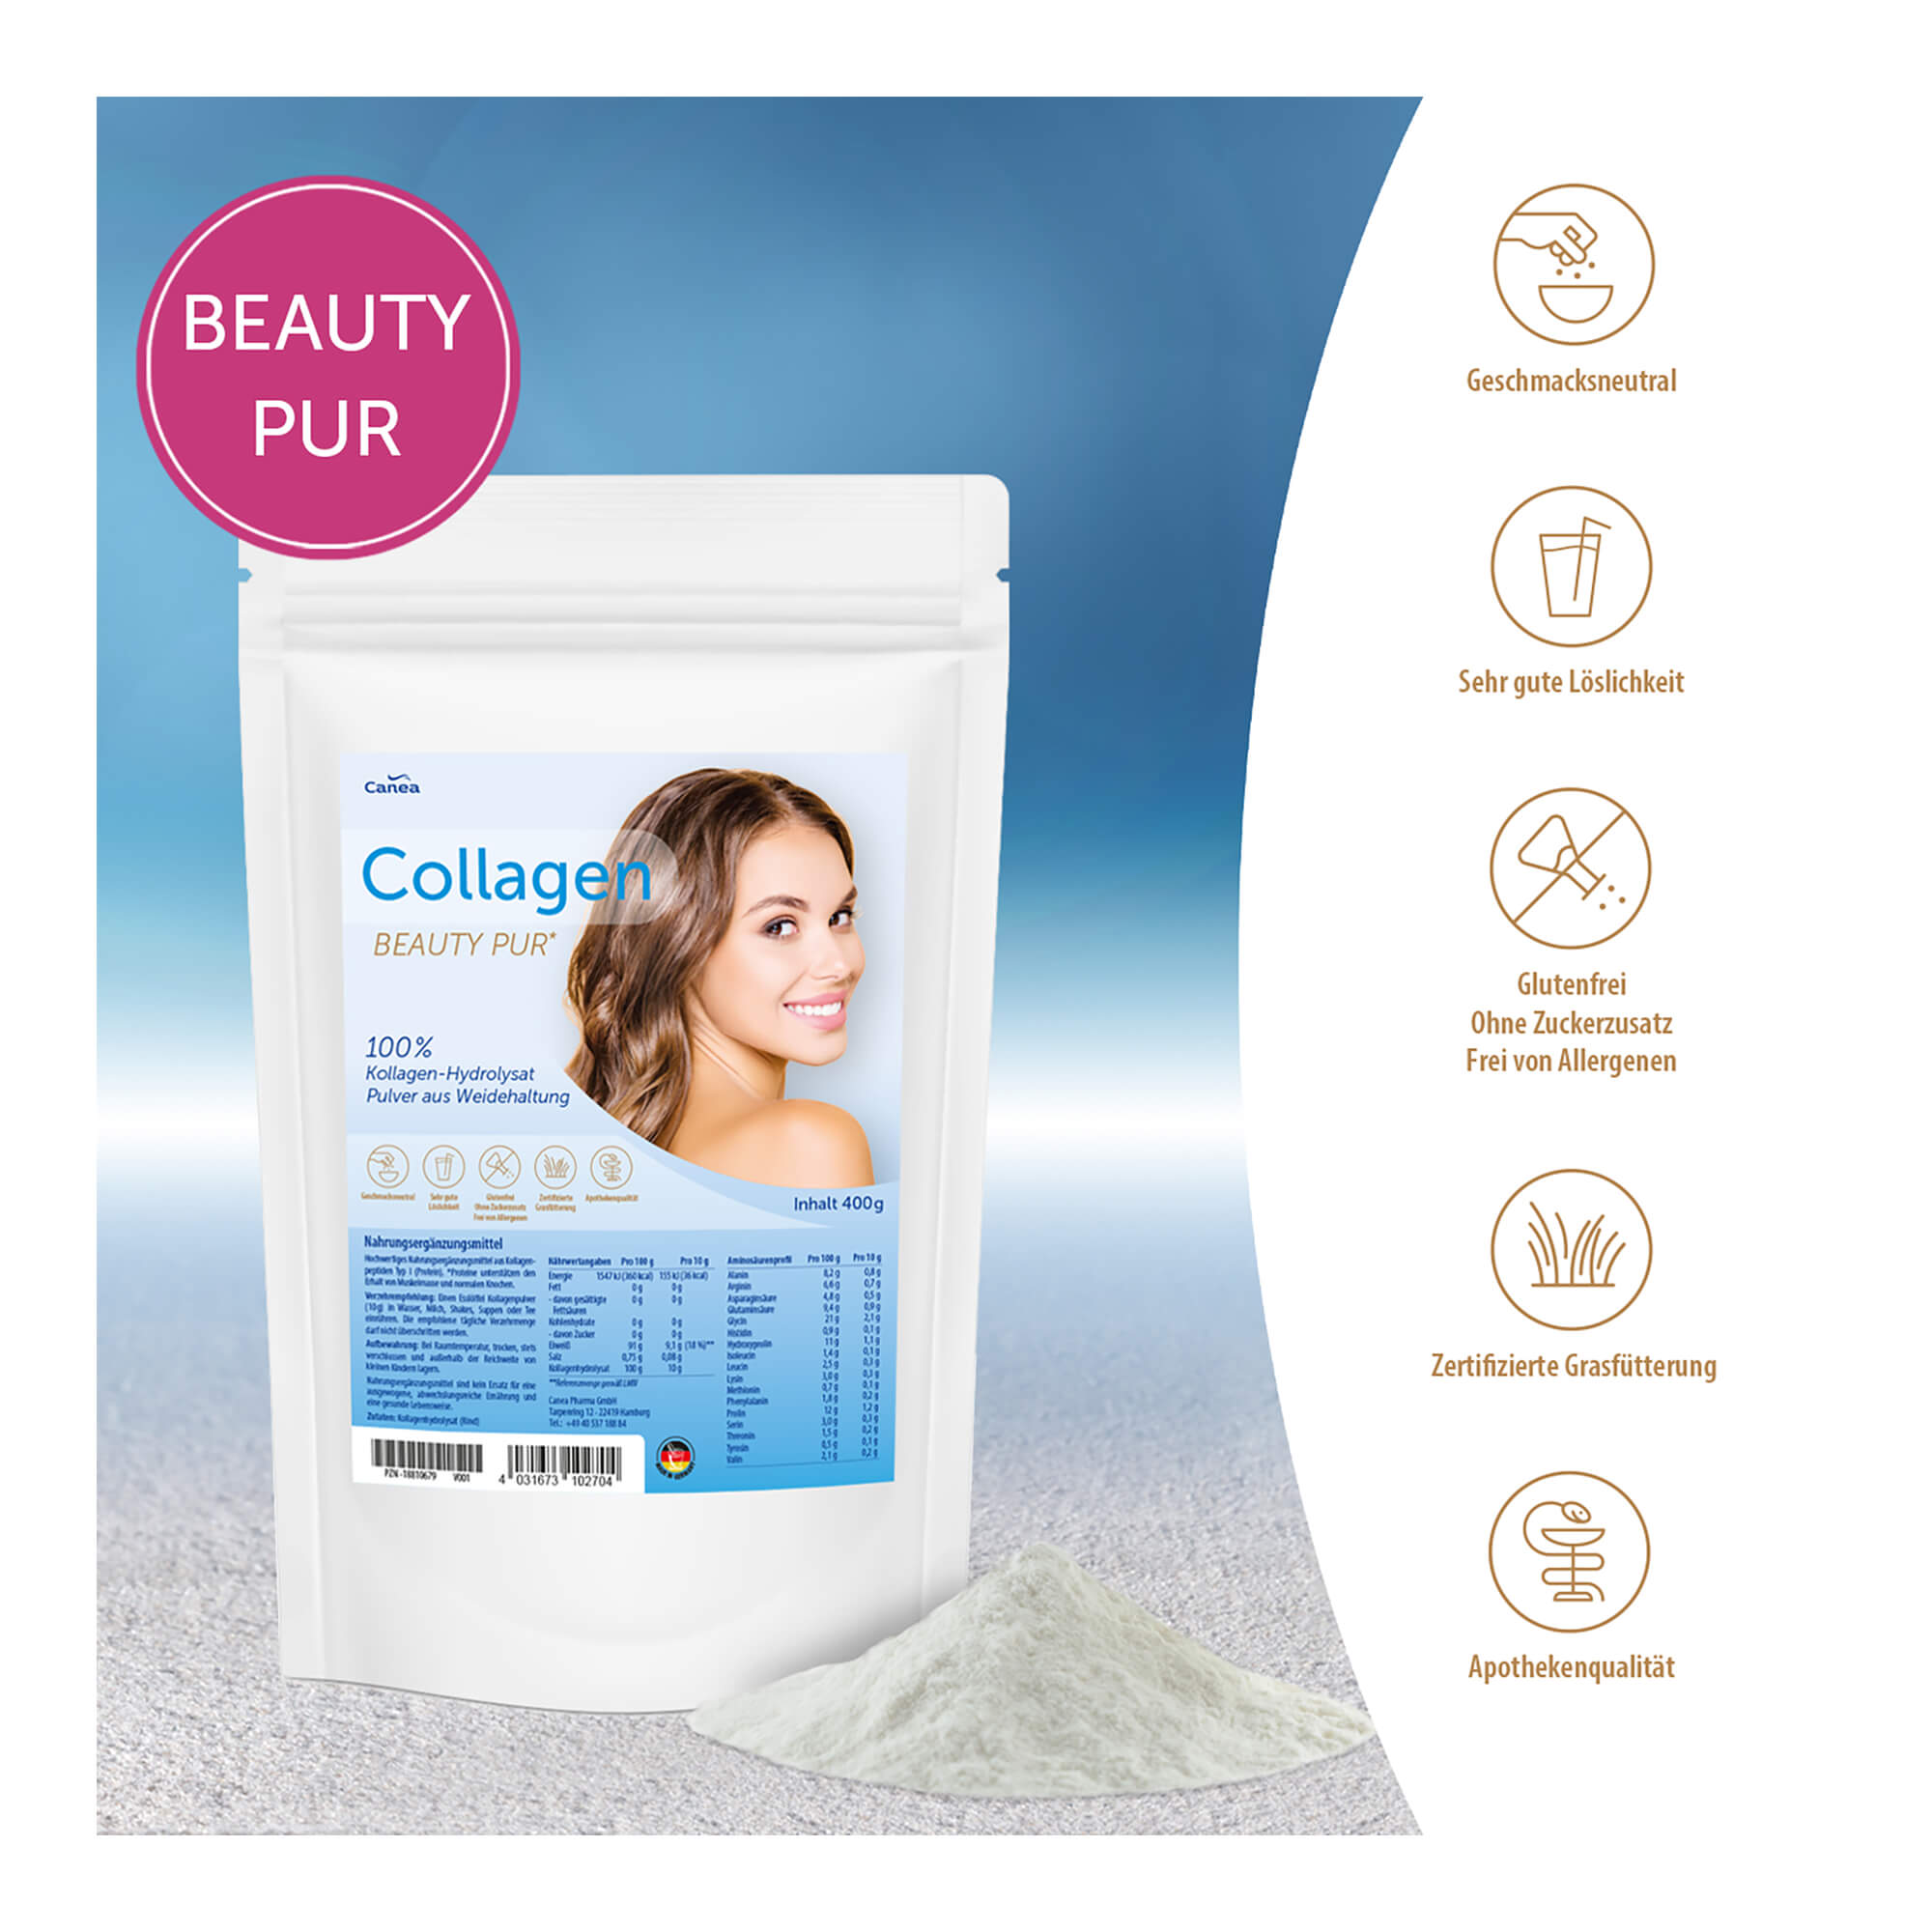 Grafik Collagen Beauty 100% Kollagen Pulver Eigenschaften